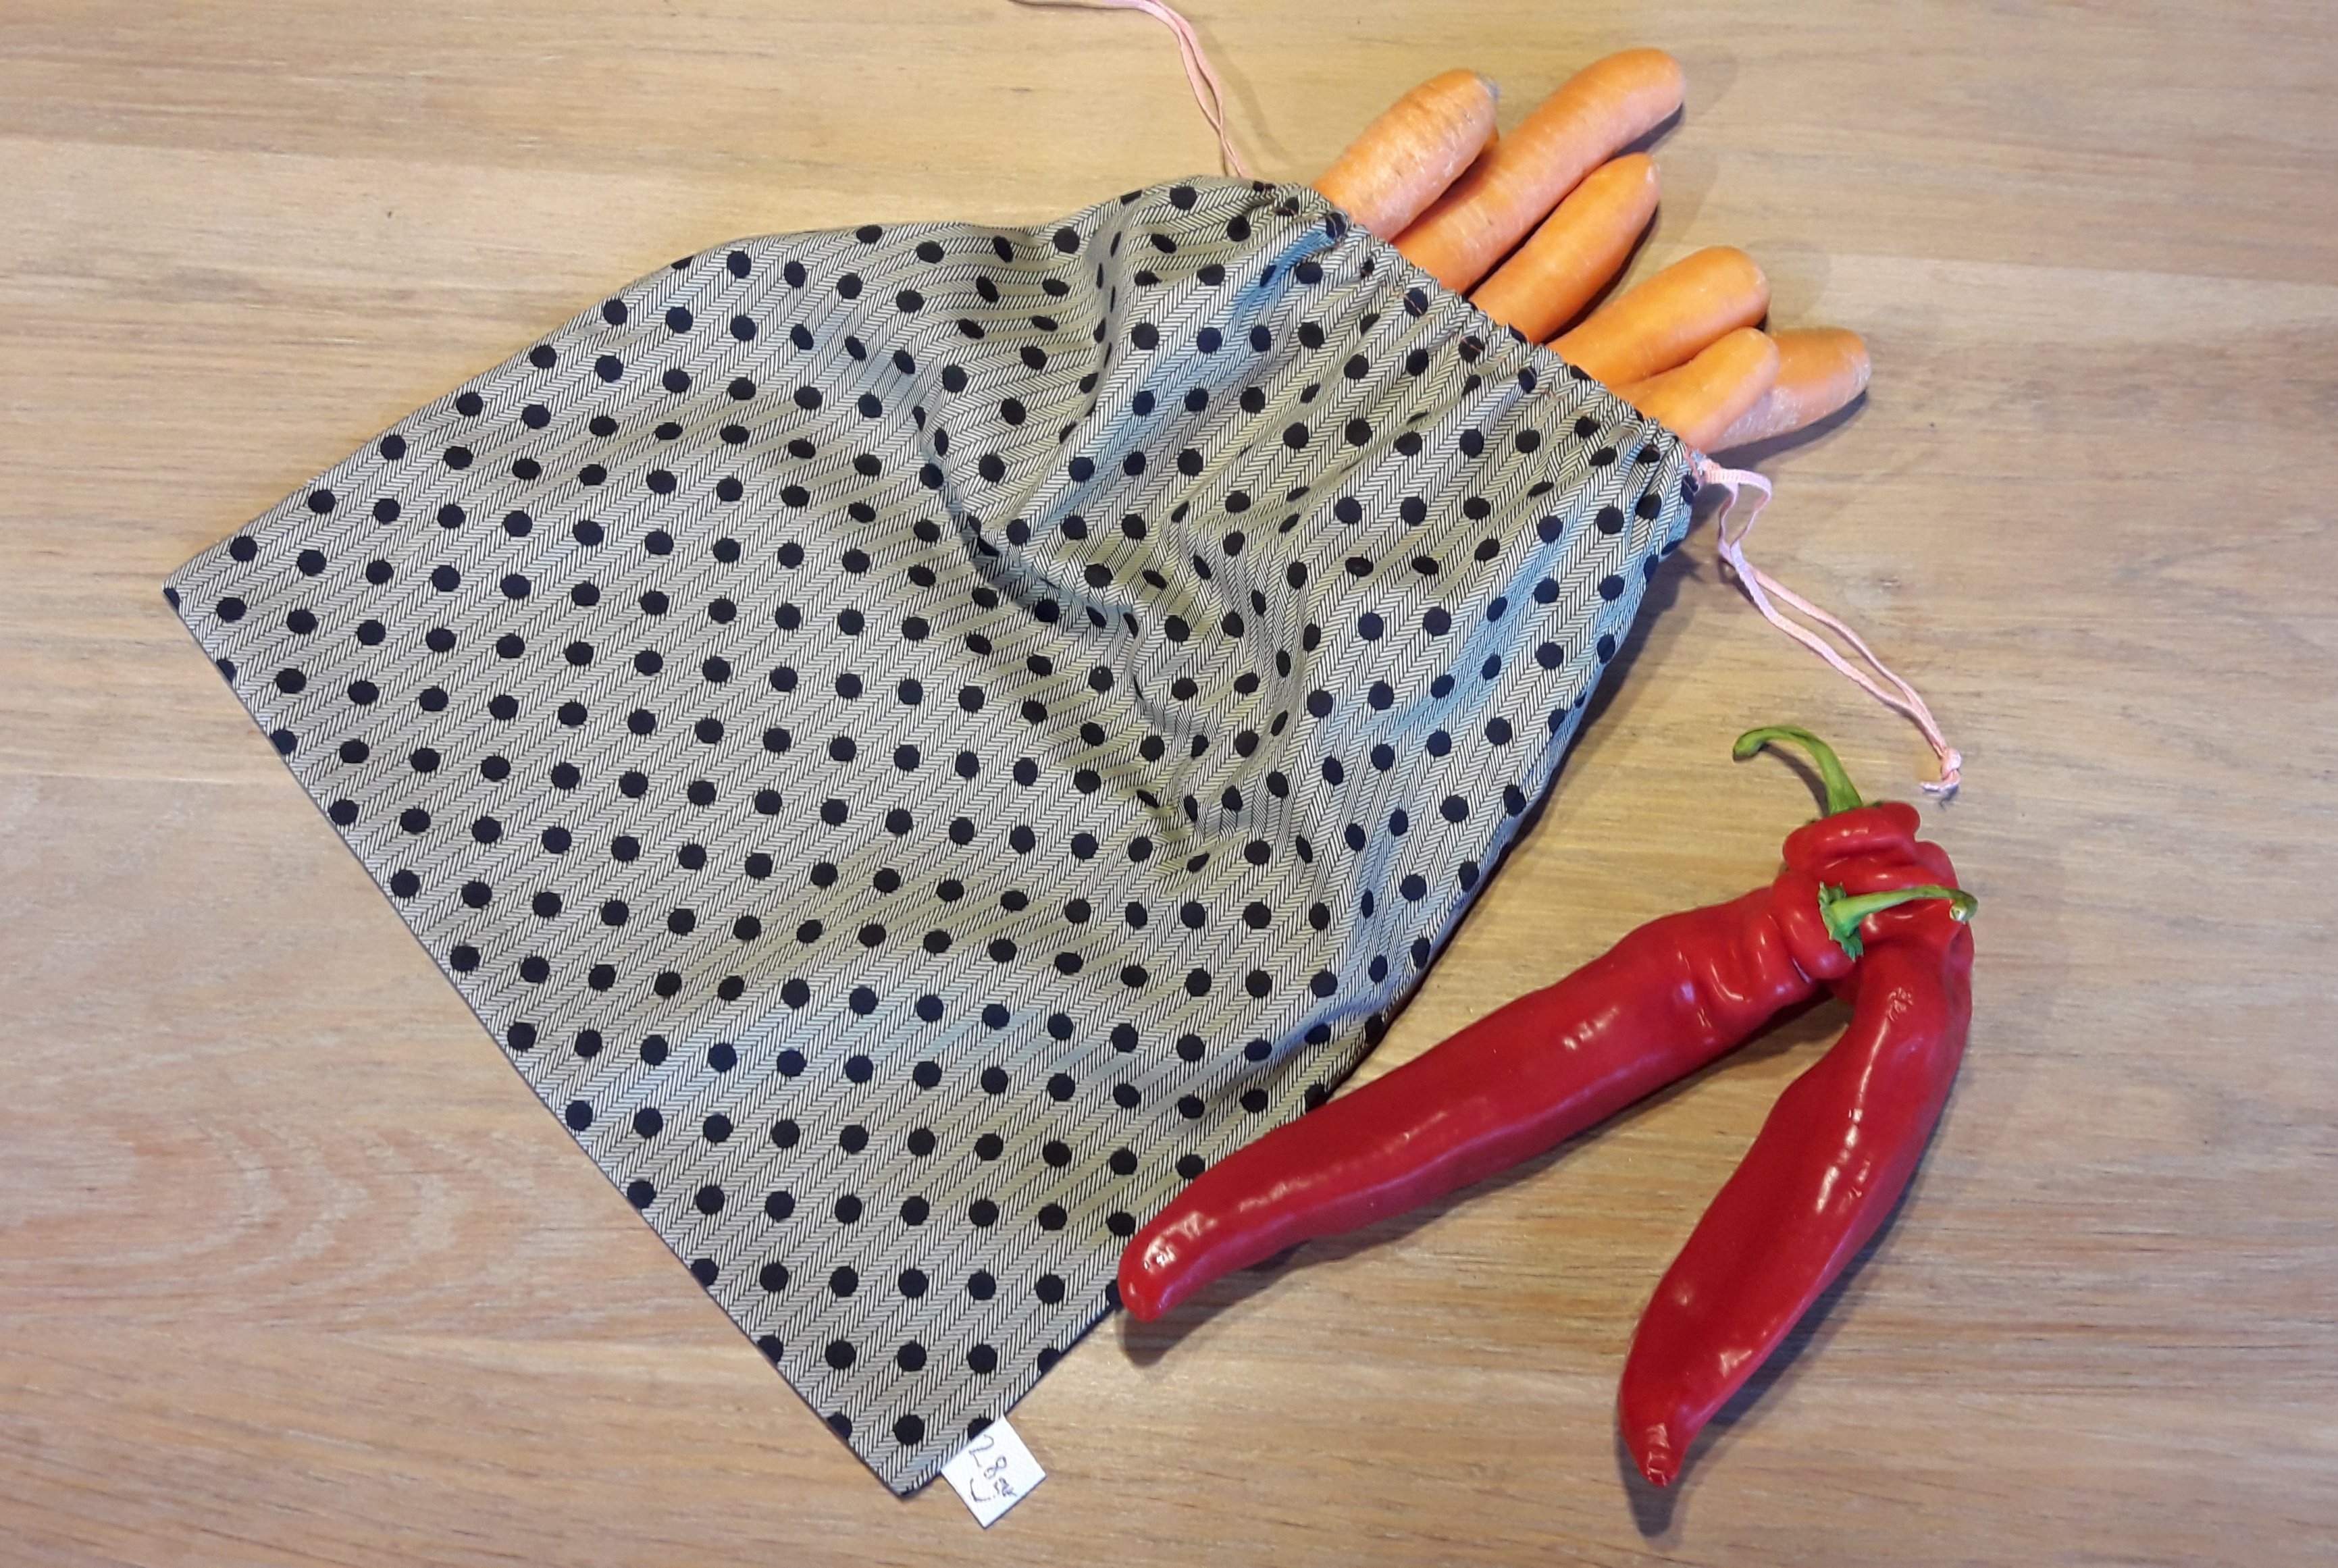 Sew a reusable grocery bag